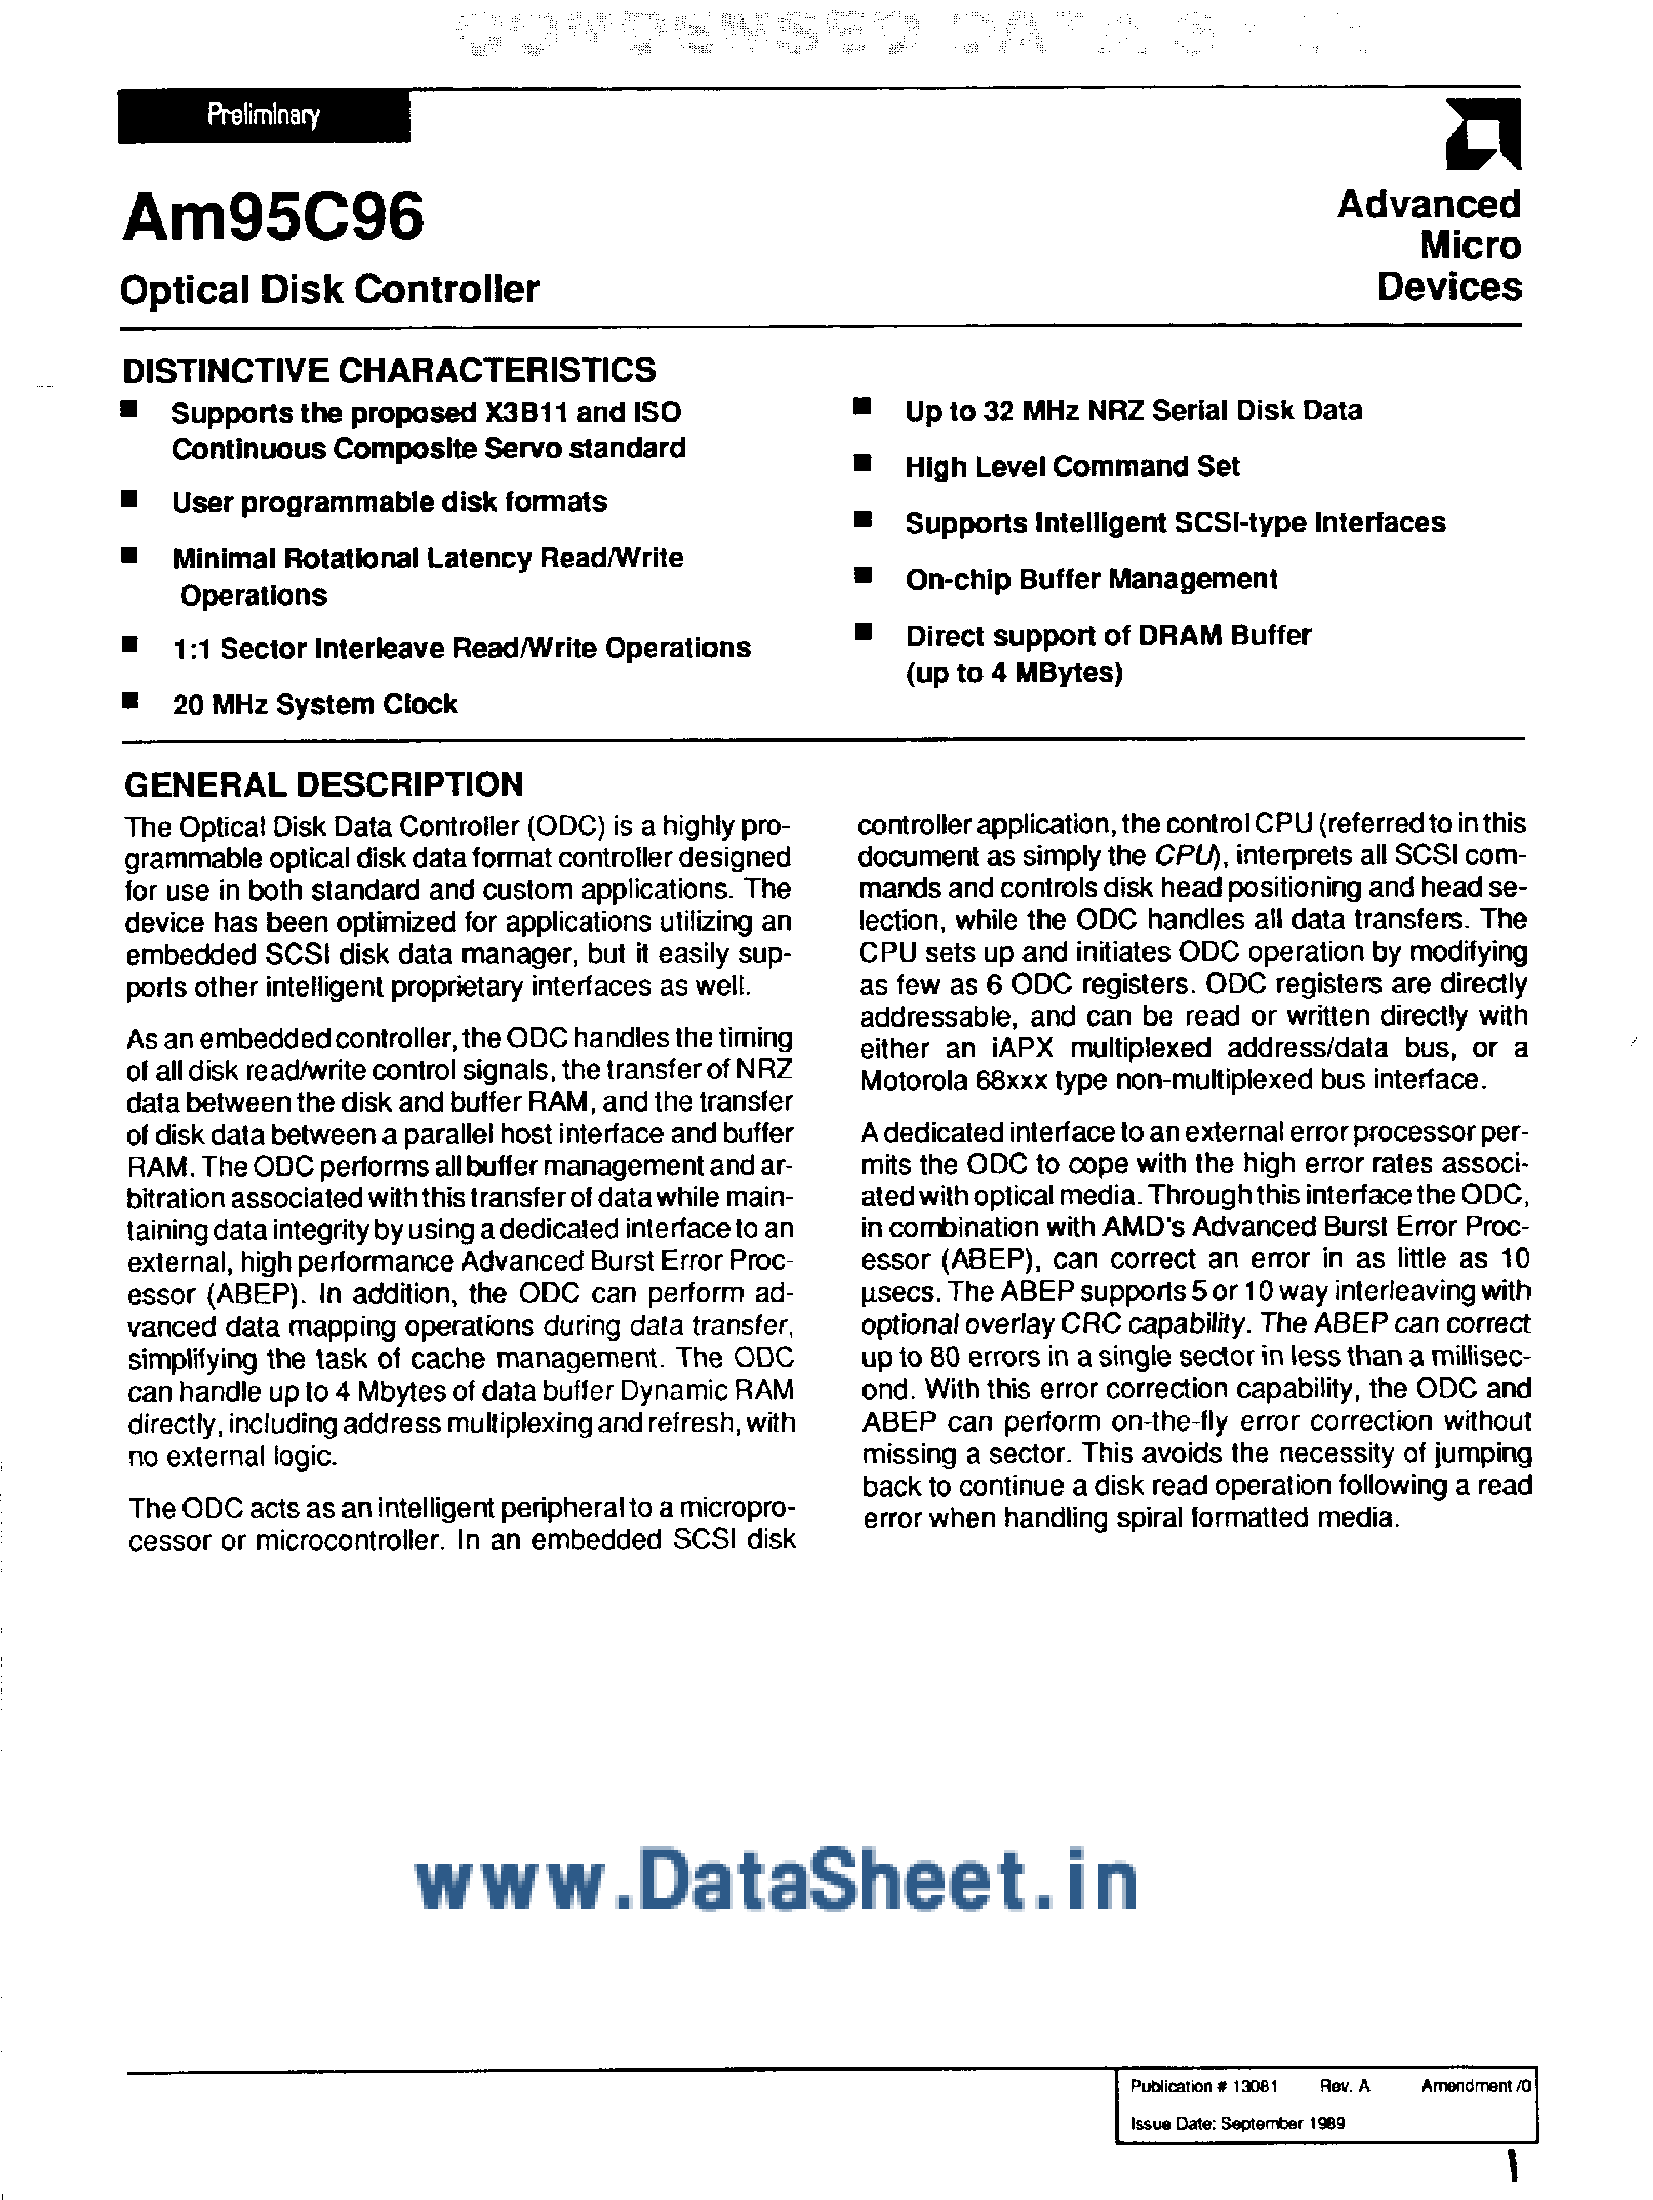 Datasheet AM95C96 - Optical Disk Controller page 1